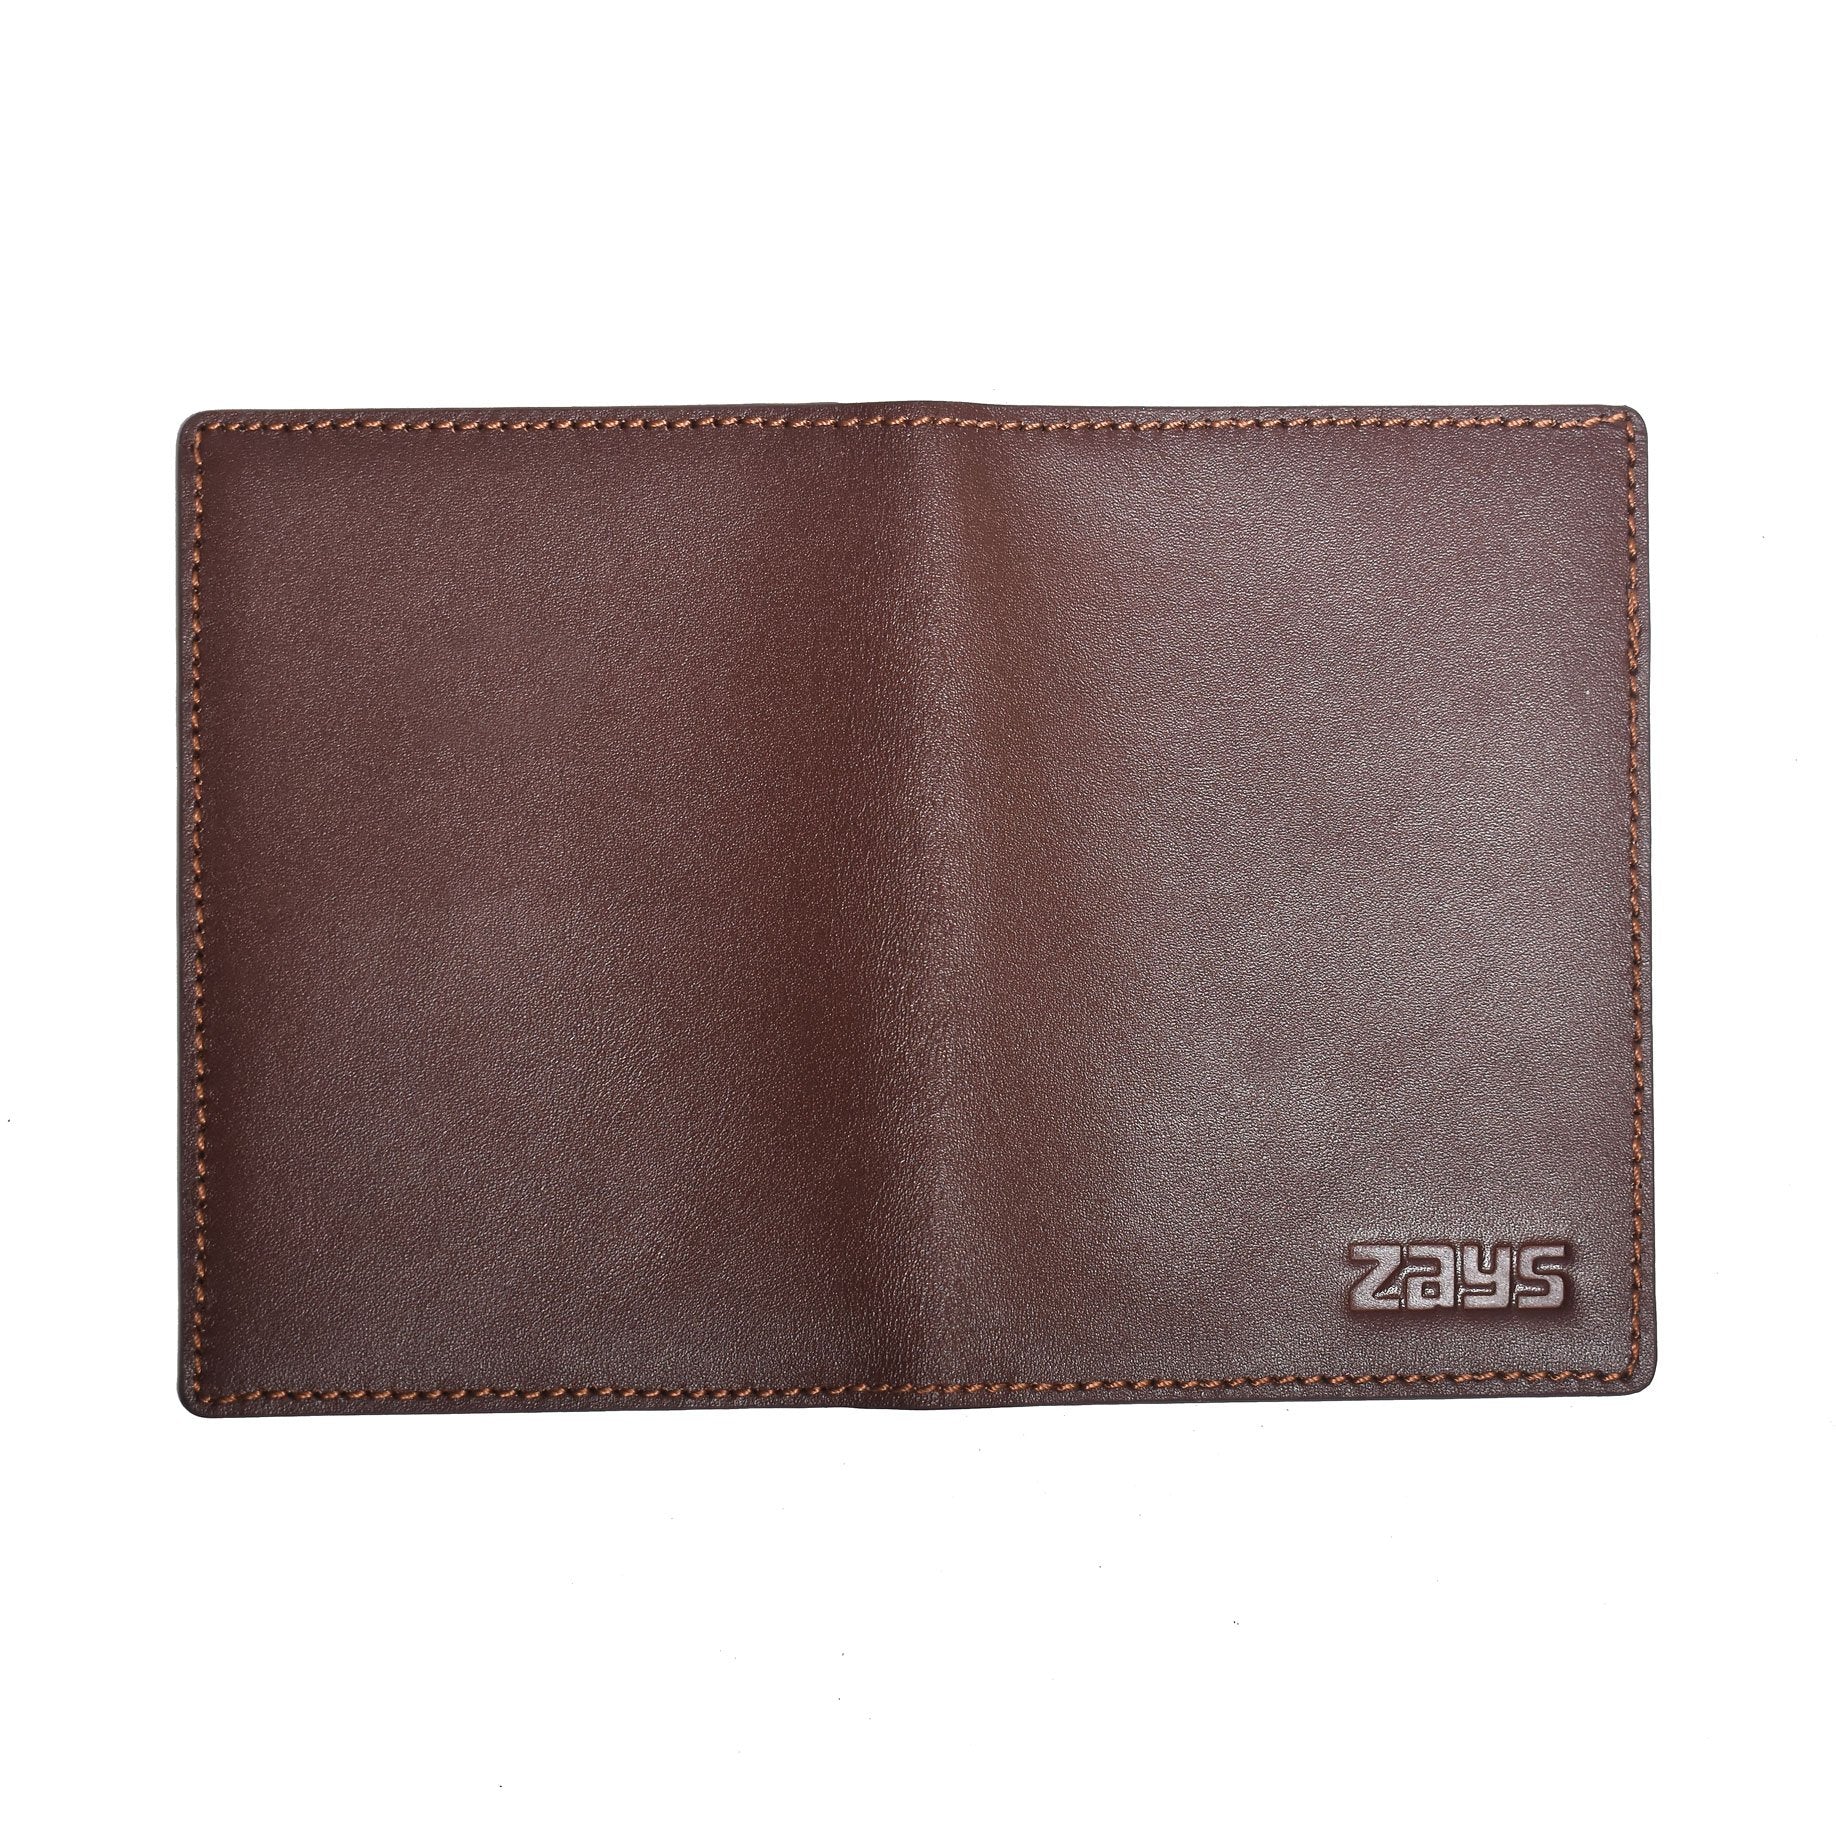 Zays Leather Passport Cover Holder For MRP Passport - Chocolate (ZAYSPCH02)